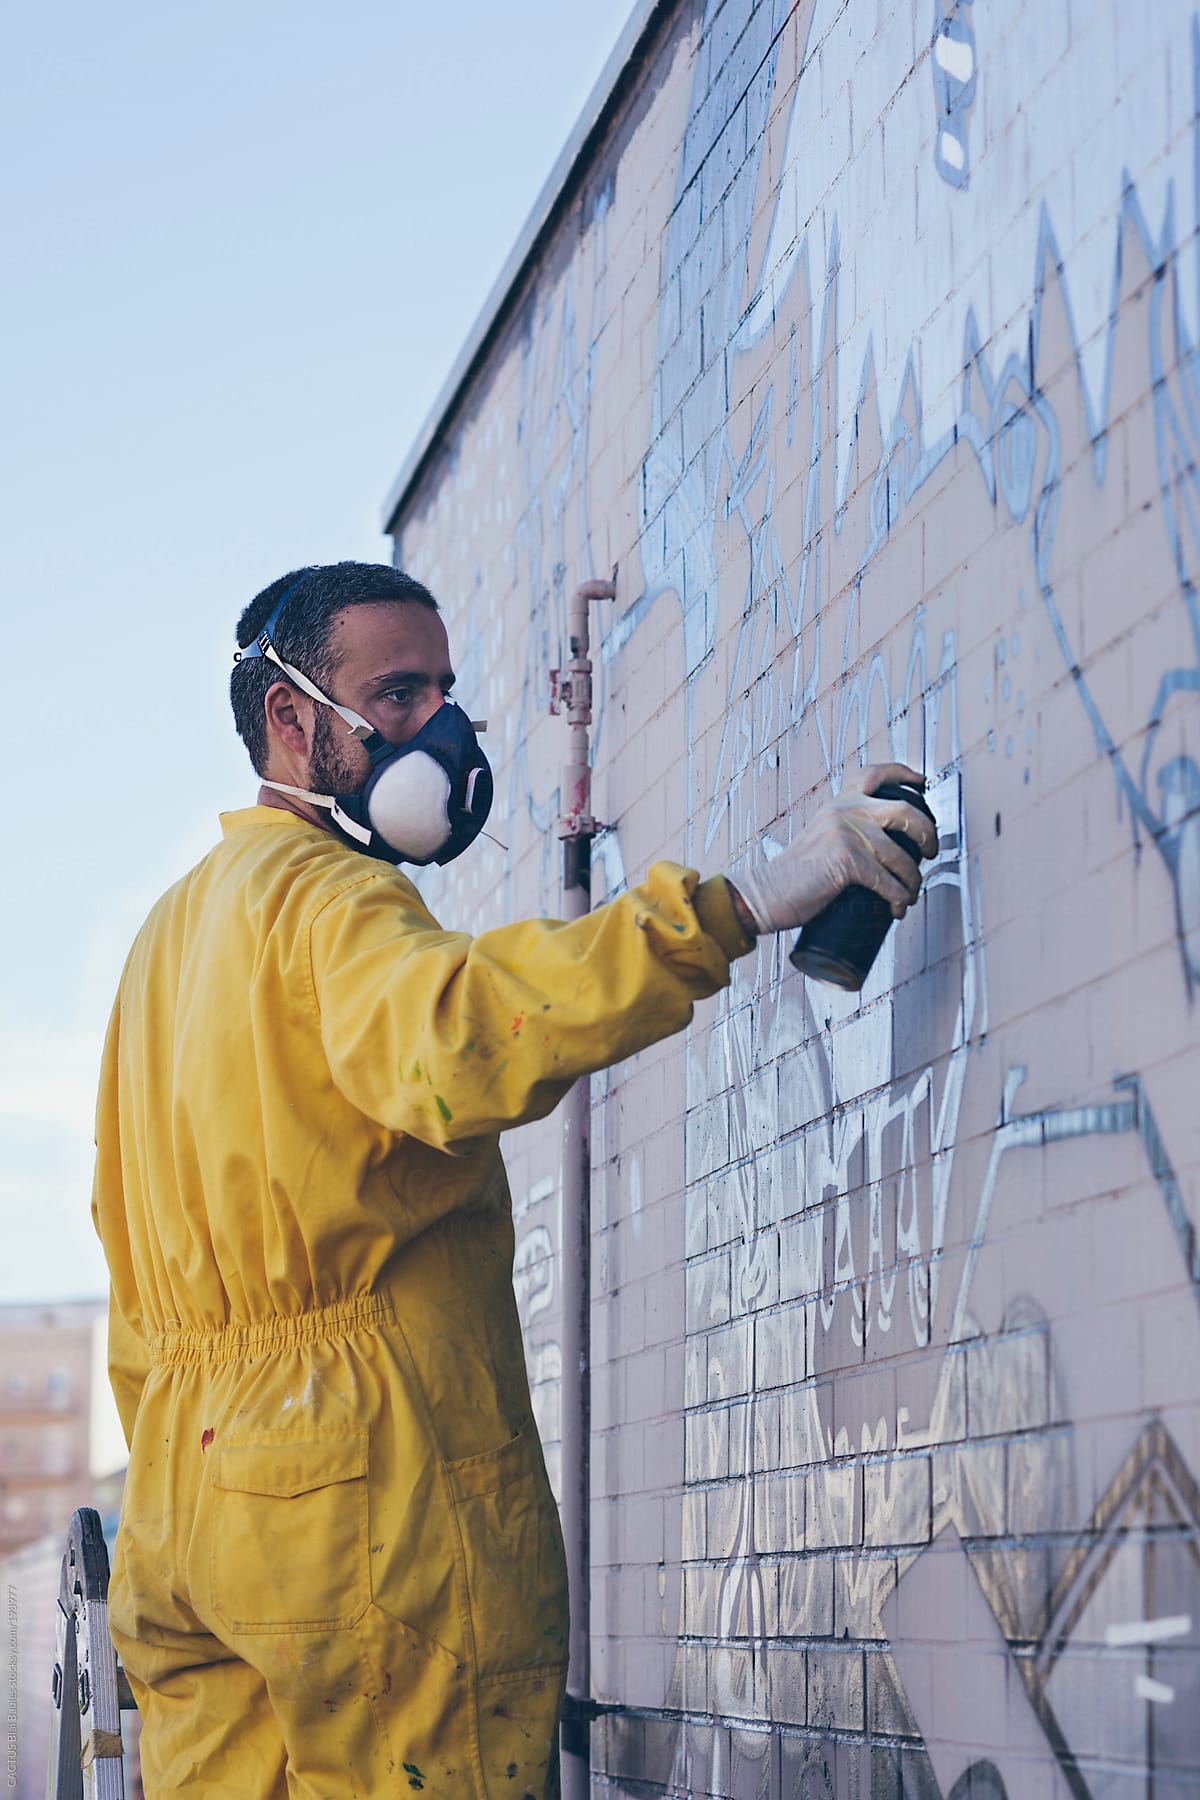 Graffiti artist at work